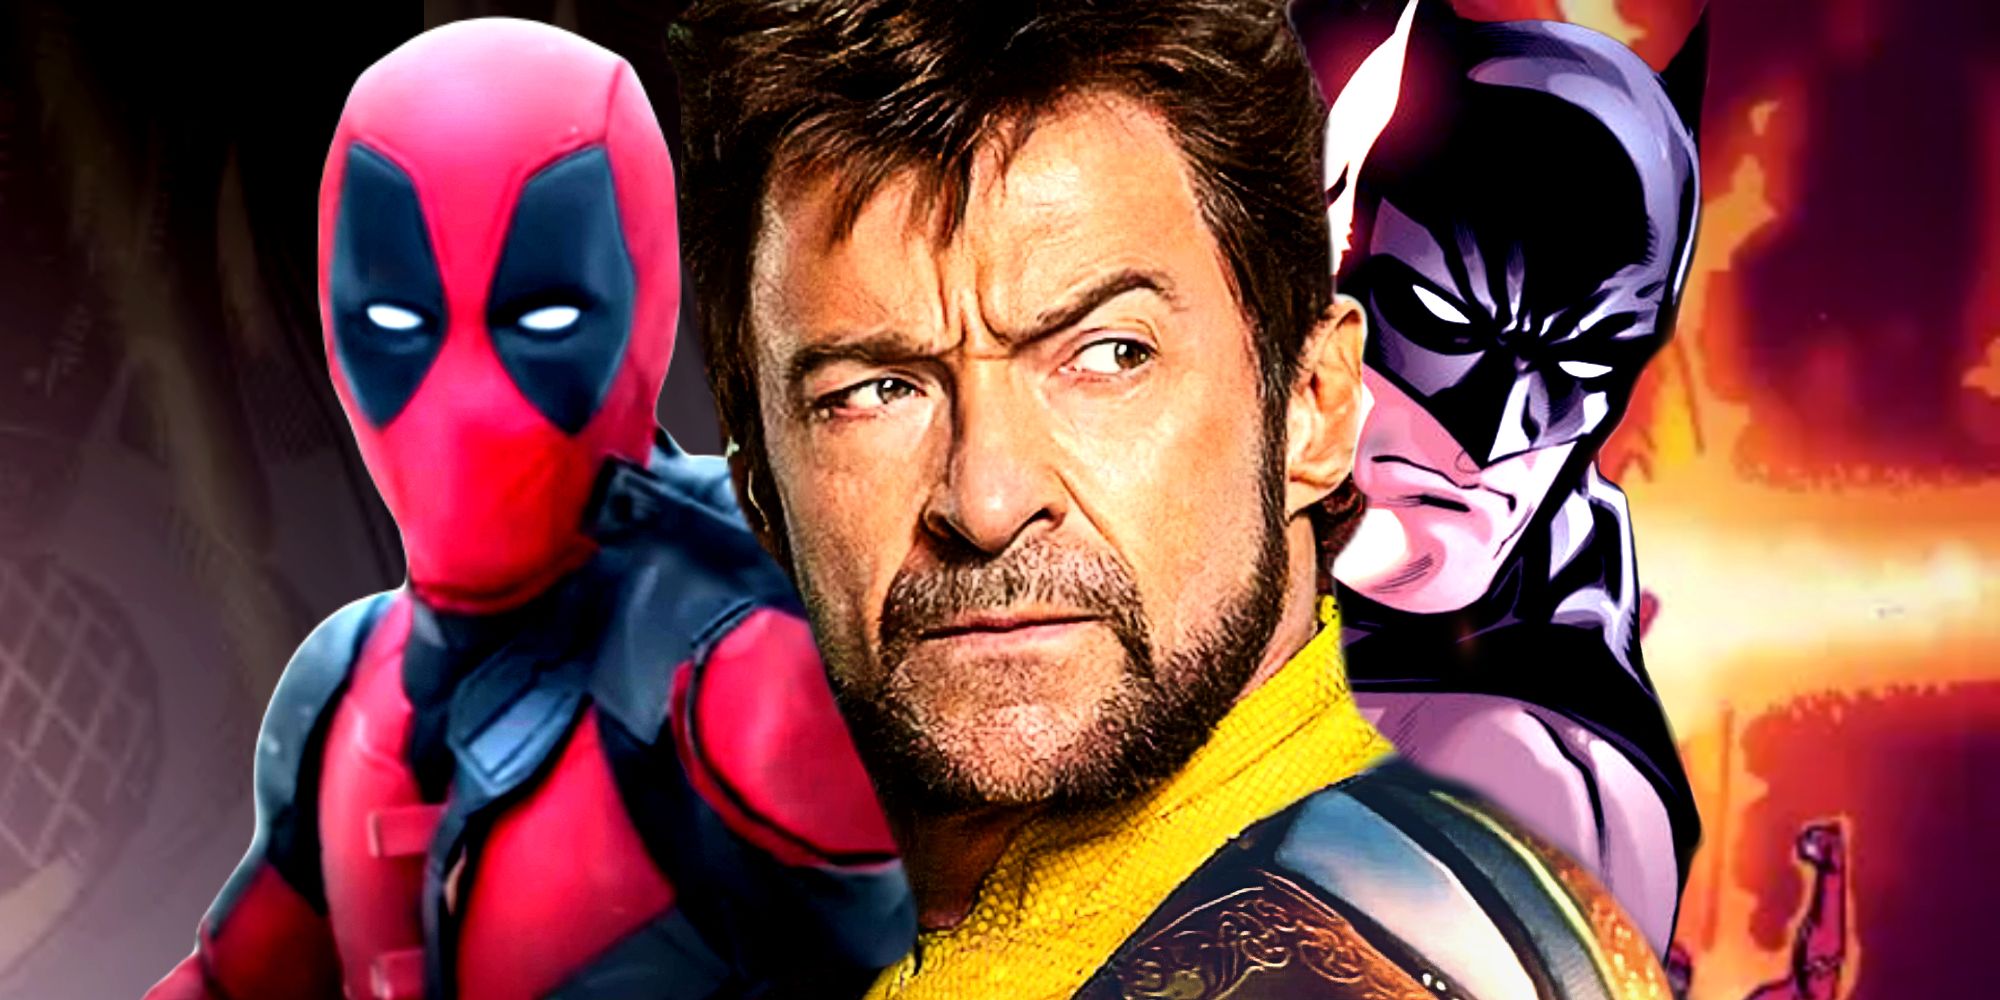 Hugh Jackman's Wolverine Looks to the Side Next to Ryan Reynolds' Deadpool and DC Comics Batman